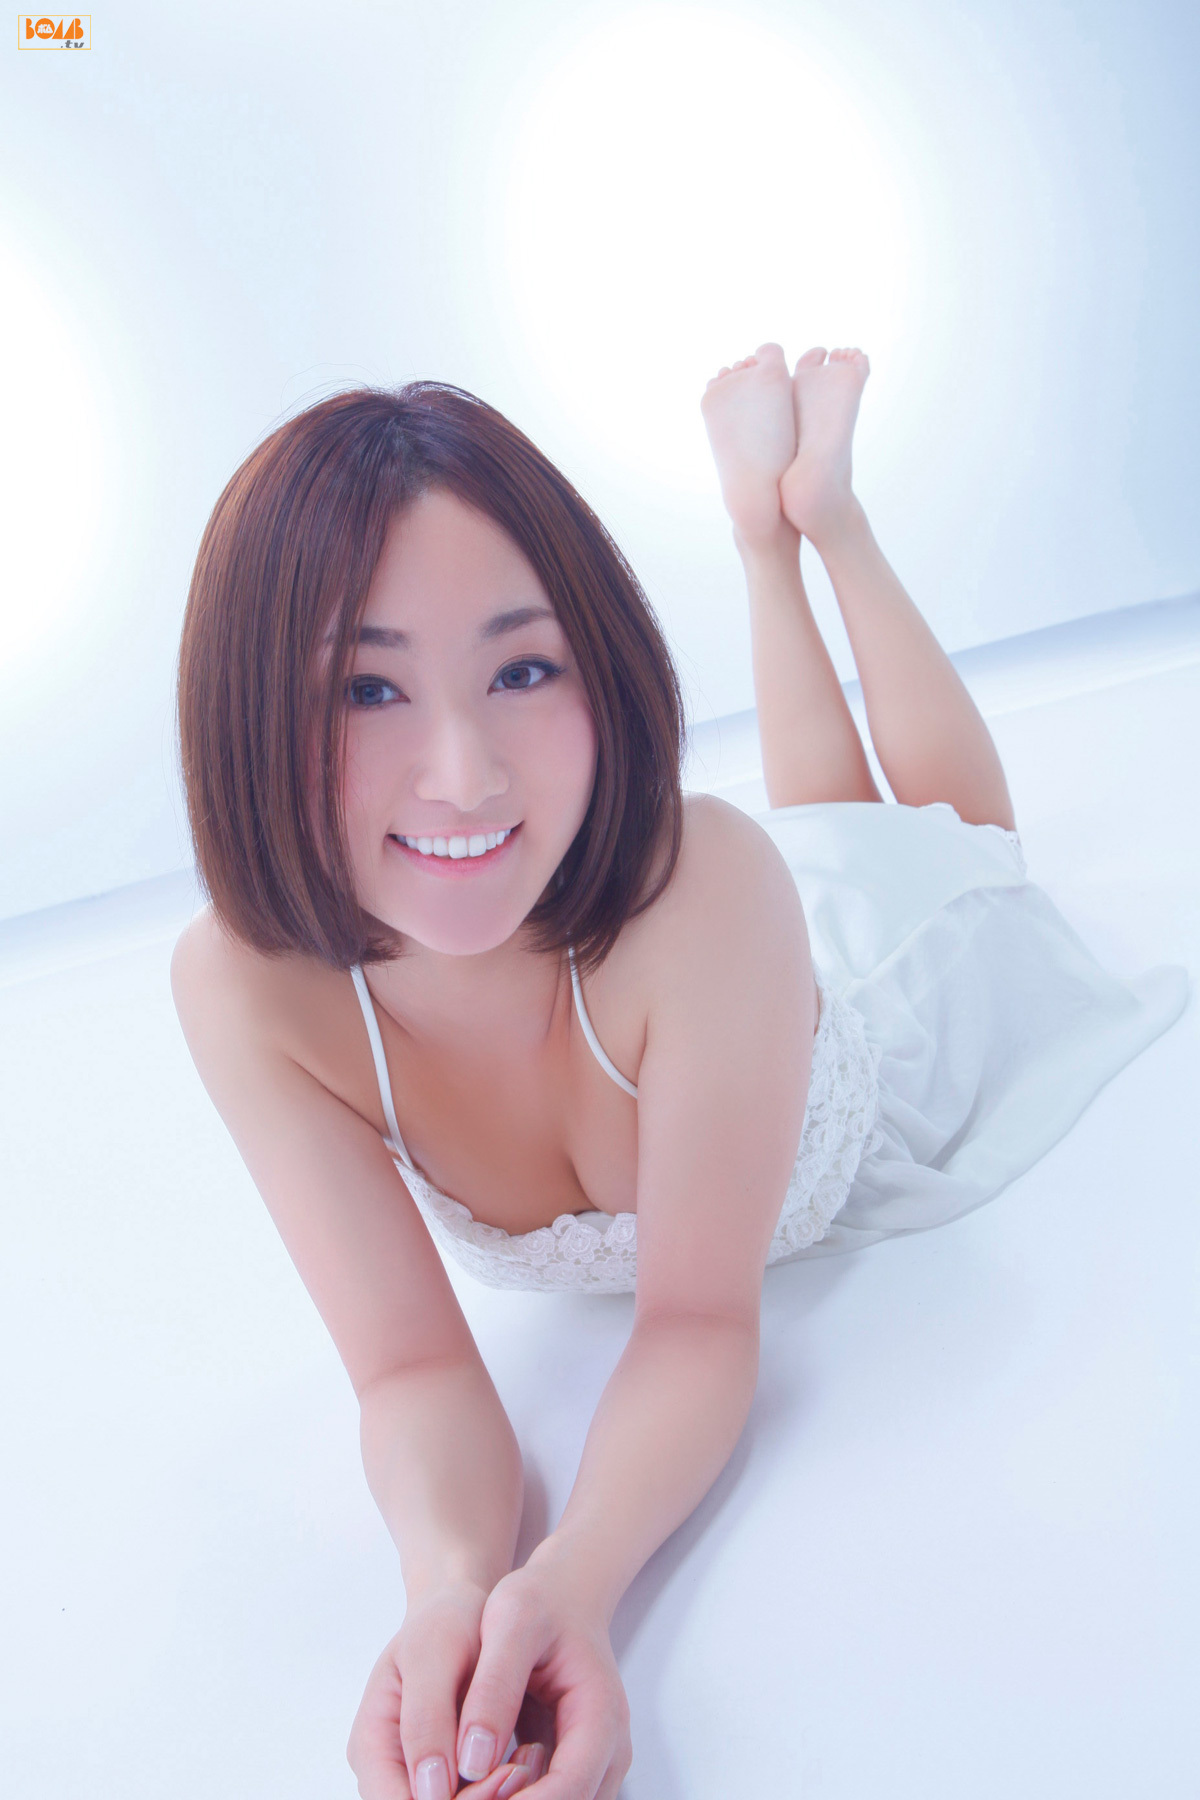 Yoshinaga Mika[ BOMB.TV ]20101 beauty pictures